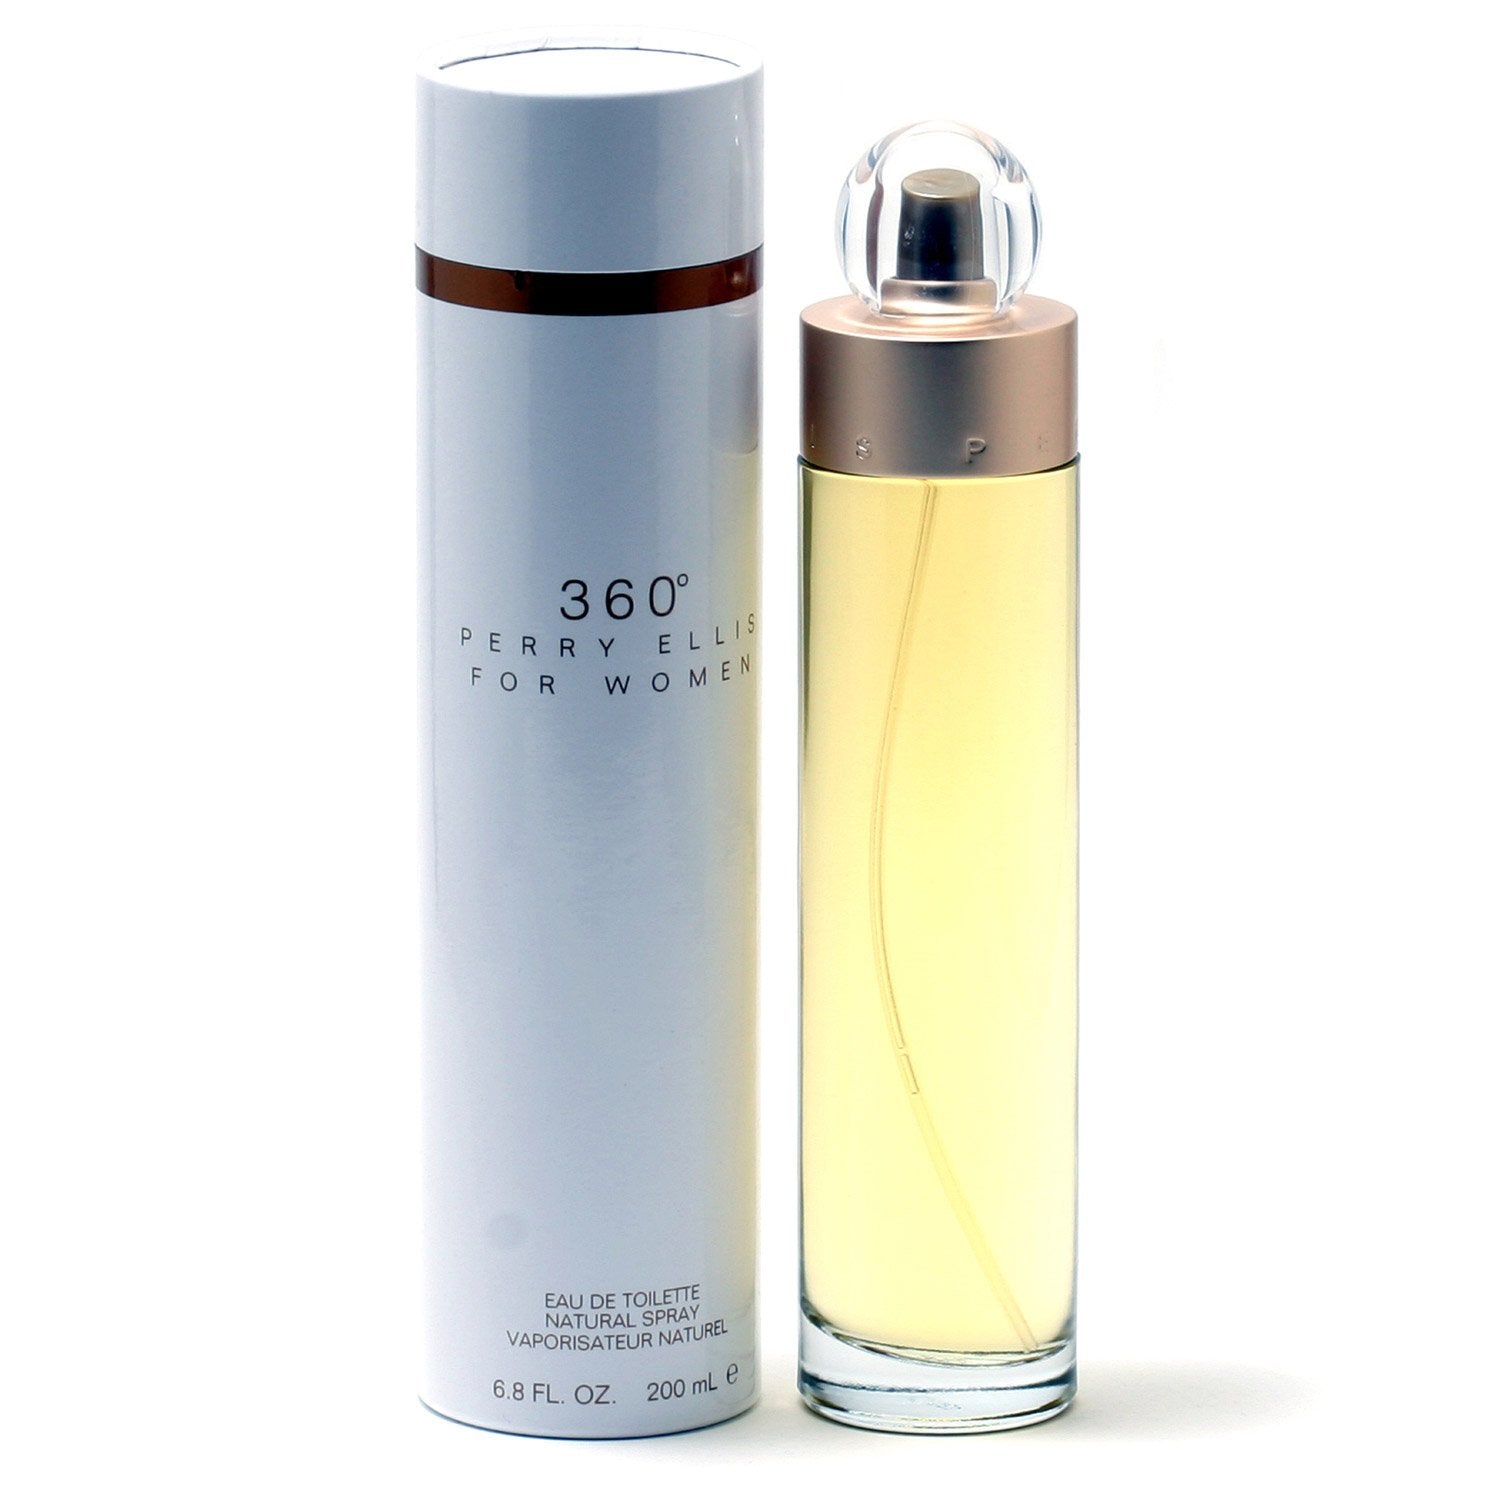 Perfume - 360 FOR WOMEN BY PERRY ELLIS - EAU DE TOILETTE SPRAY